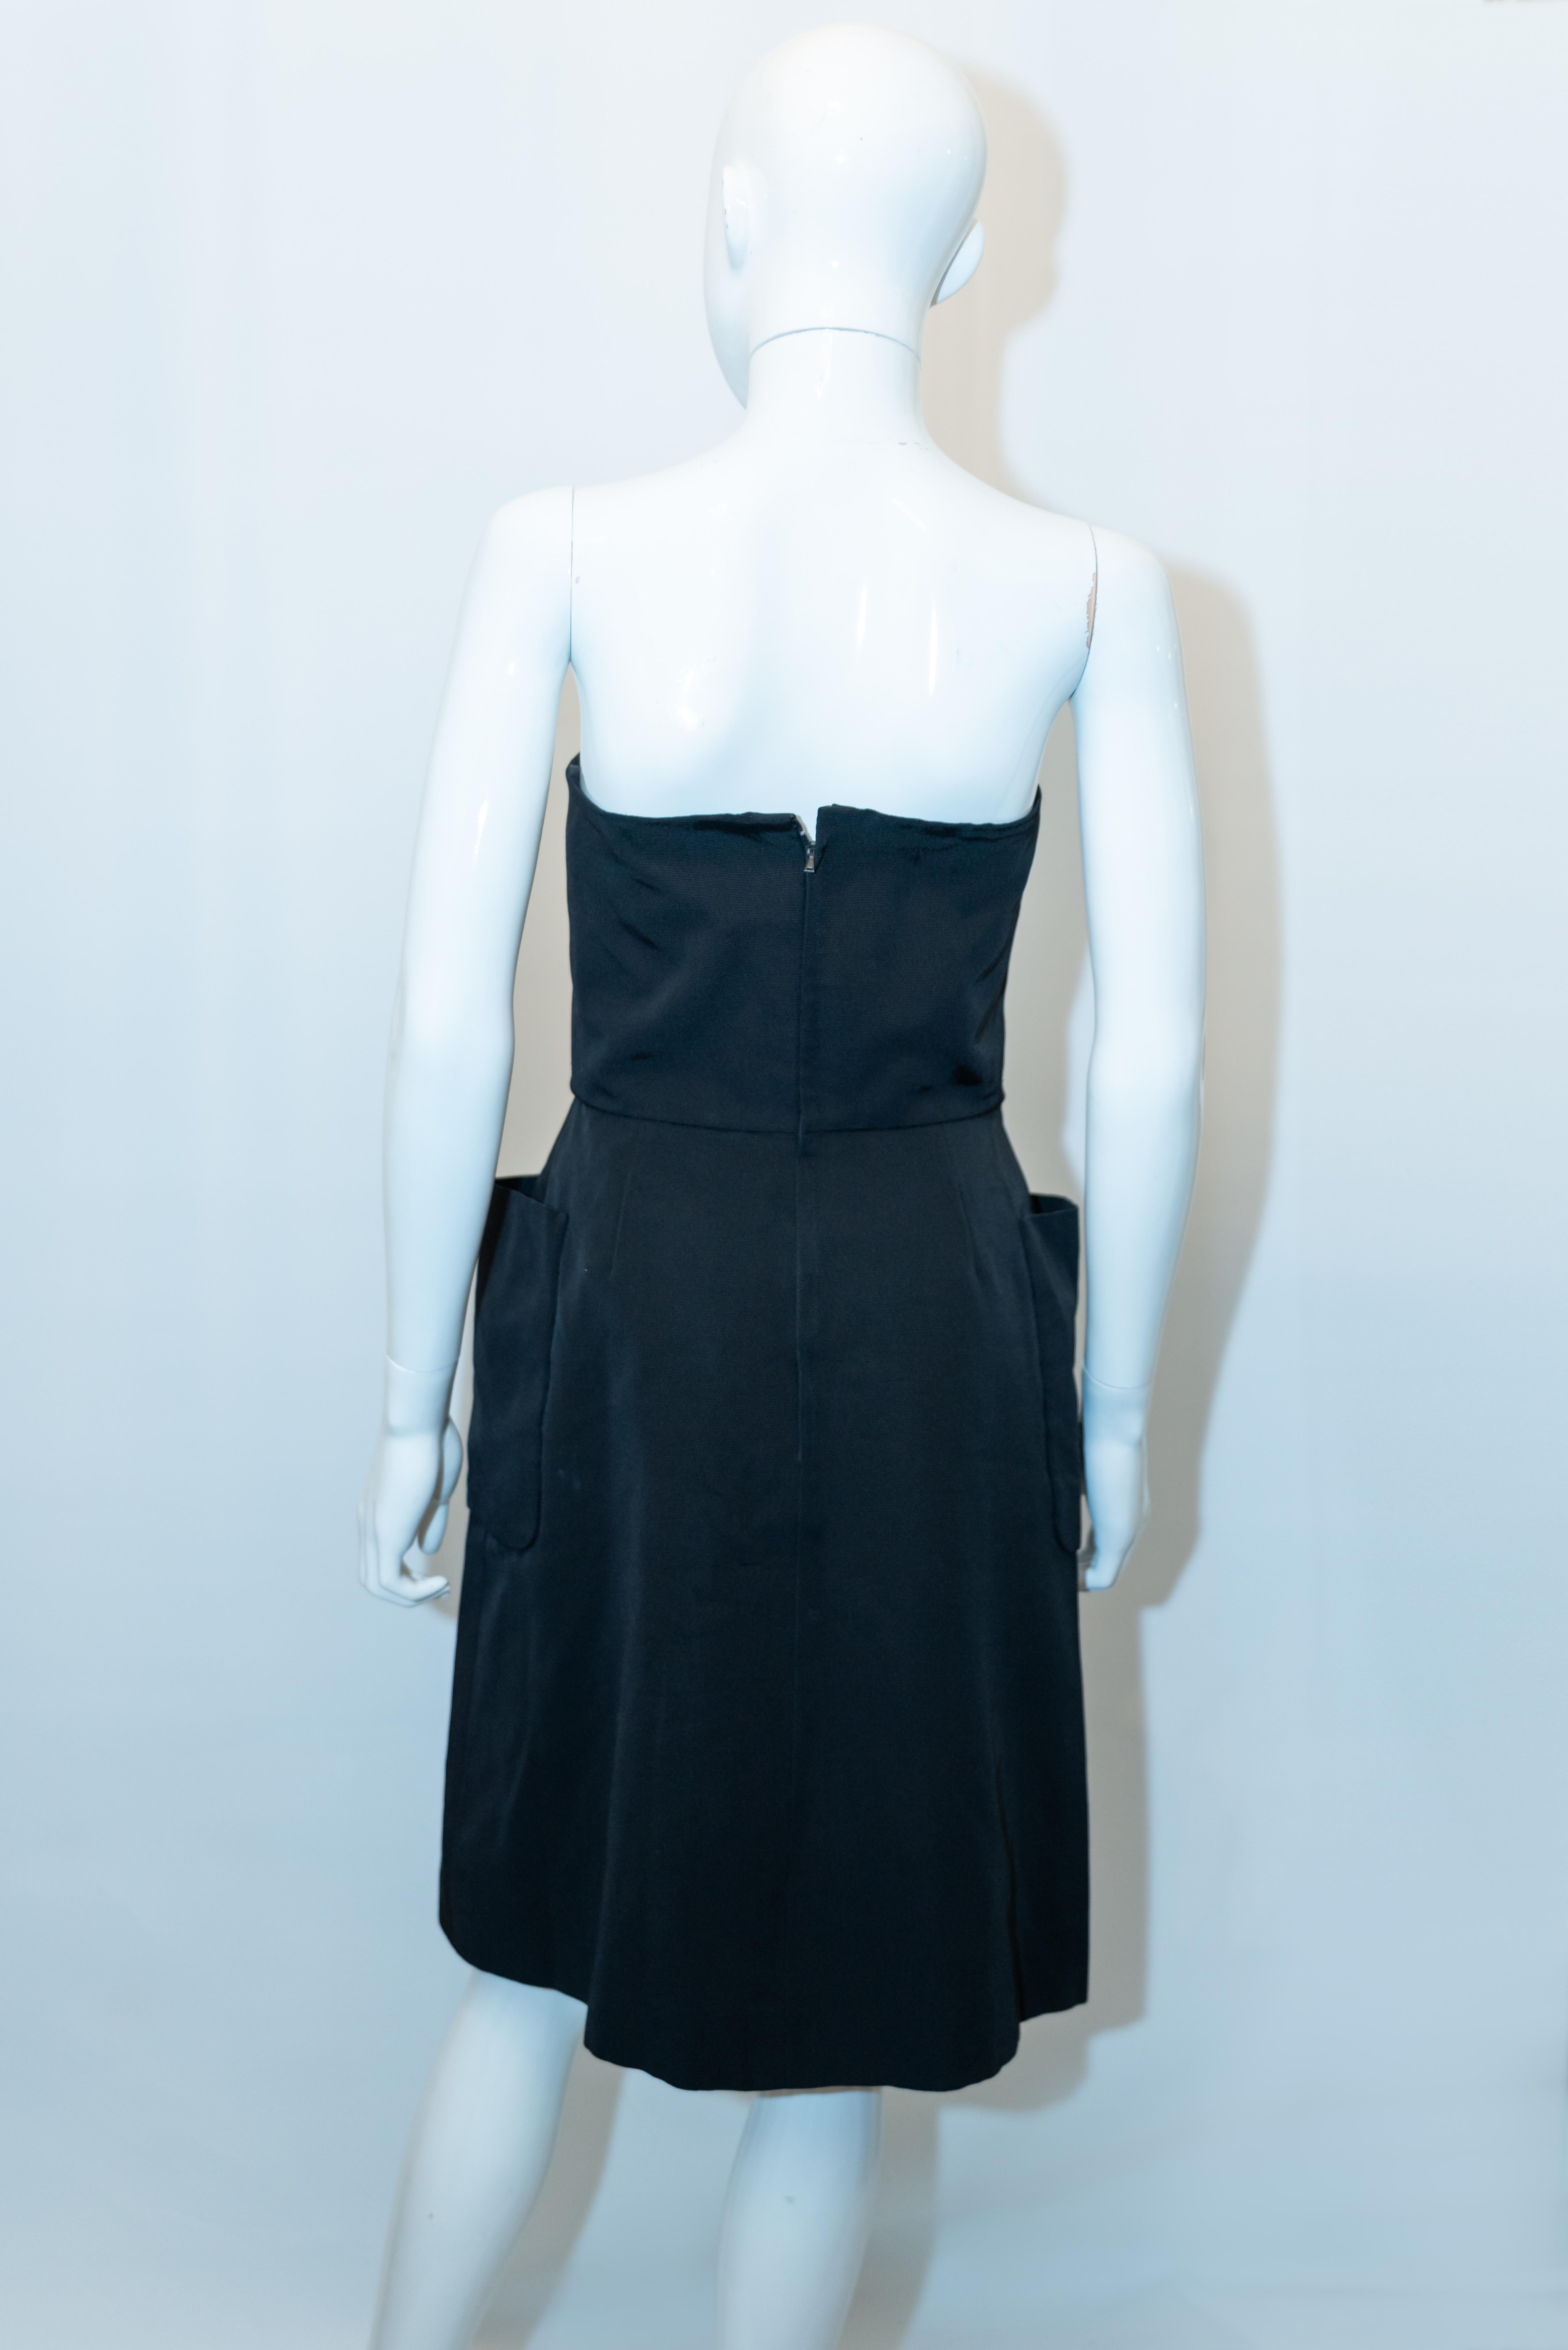 Women's Nina Ricci Paris Black Cocktail Dress with Pockets For Sale